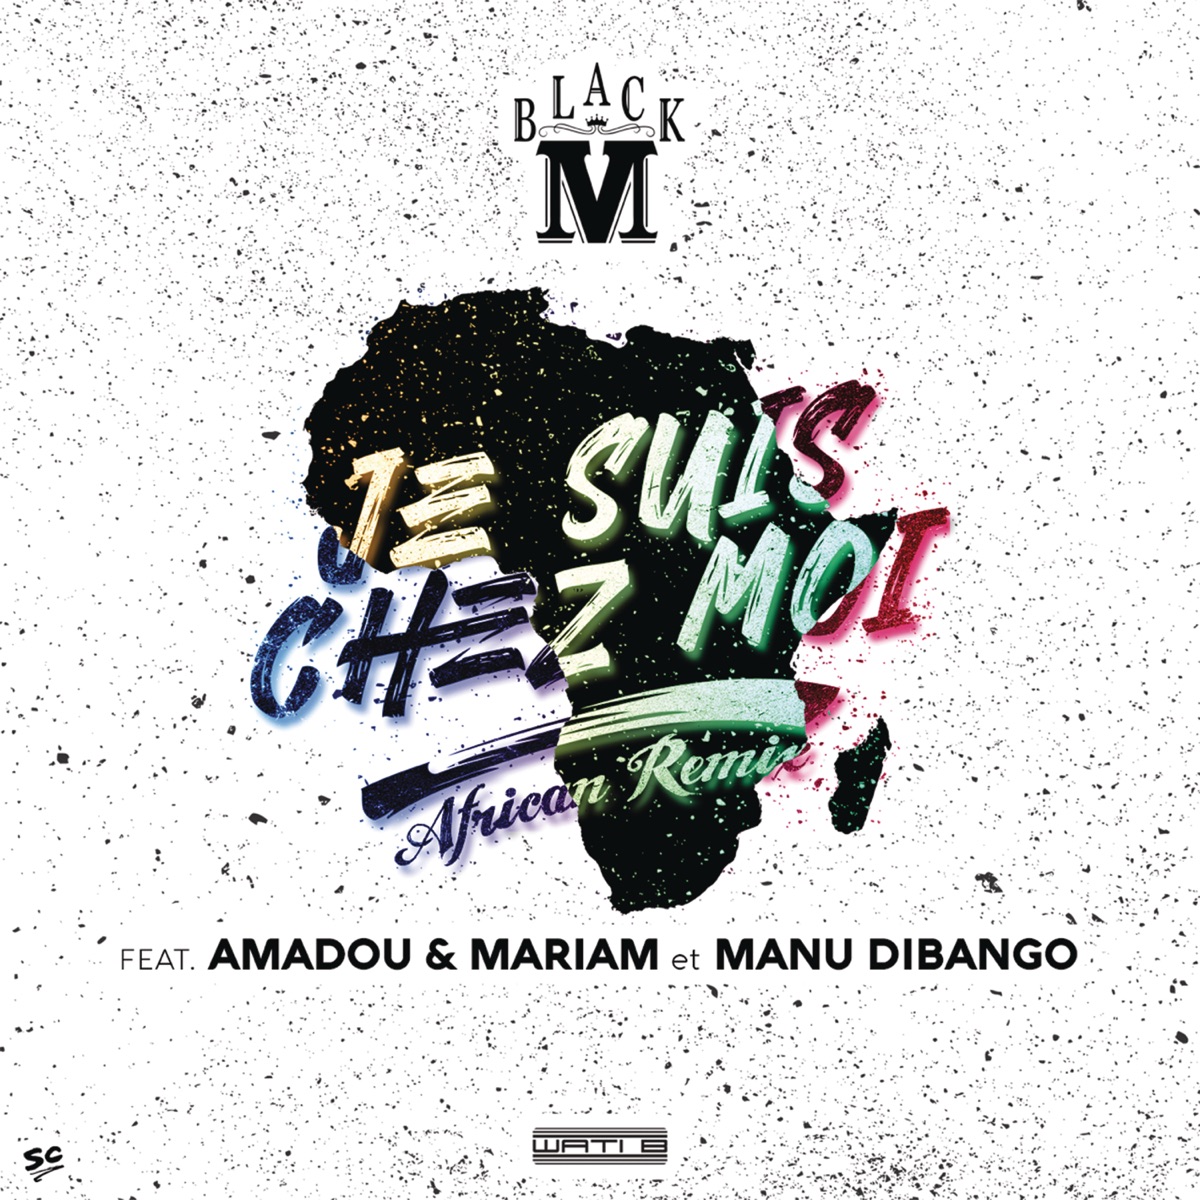 Je suis chez moi (African Remix) [feat. Amadou & Mariam & Manu Dibango] -  Single by Black M on Apple Music